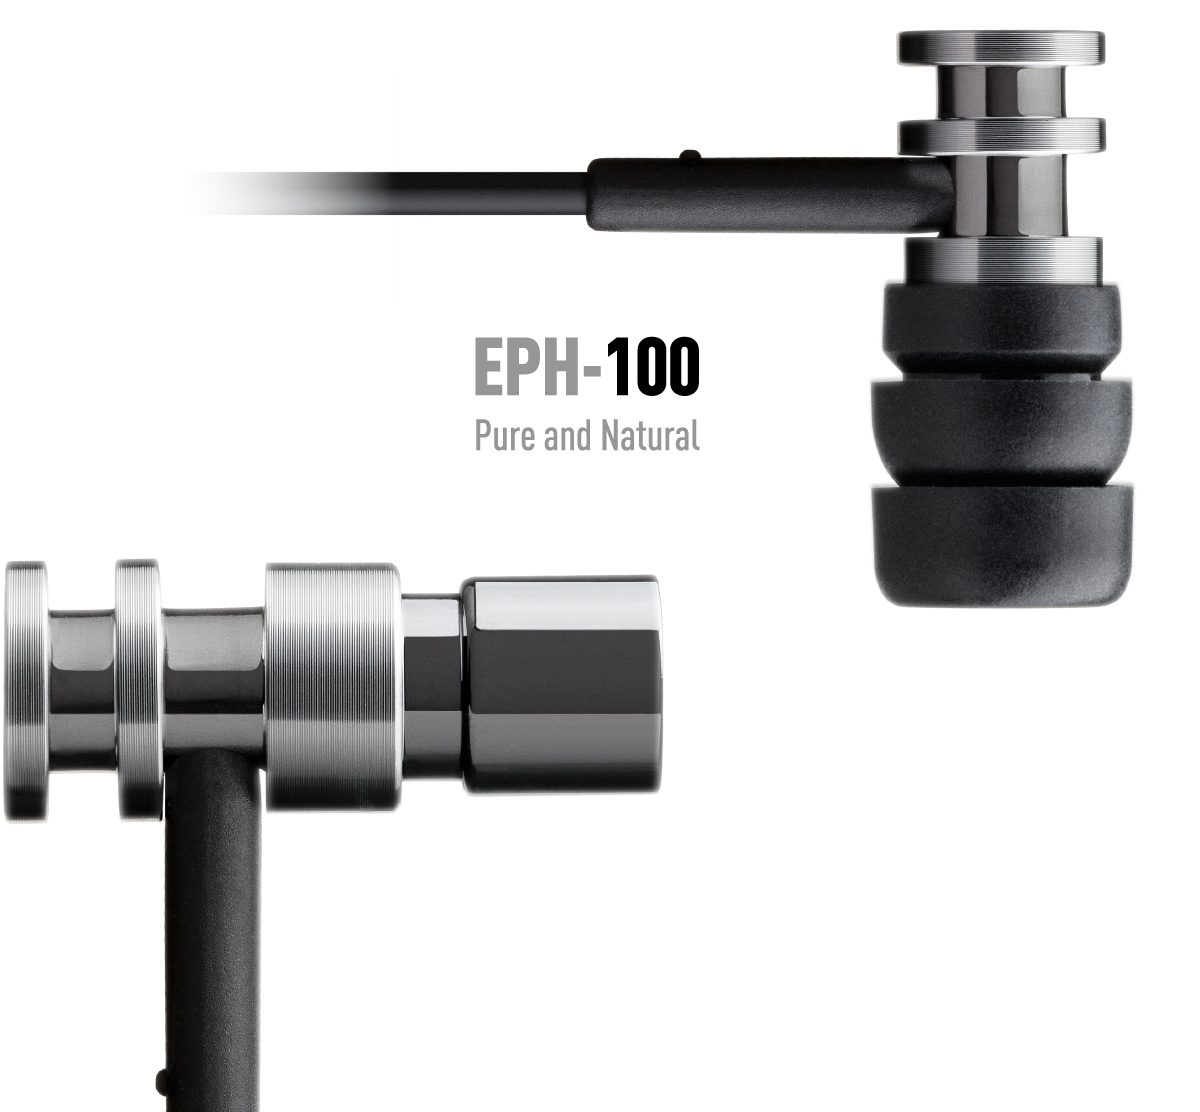 EPH-100 - Overview - Headphones & Earphones - Audio & Visual 